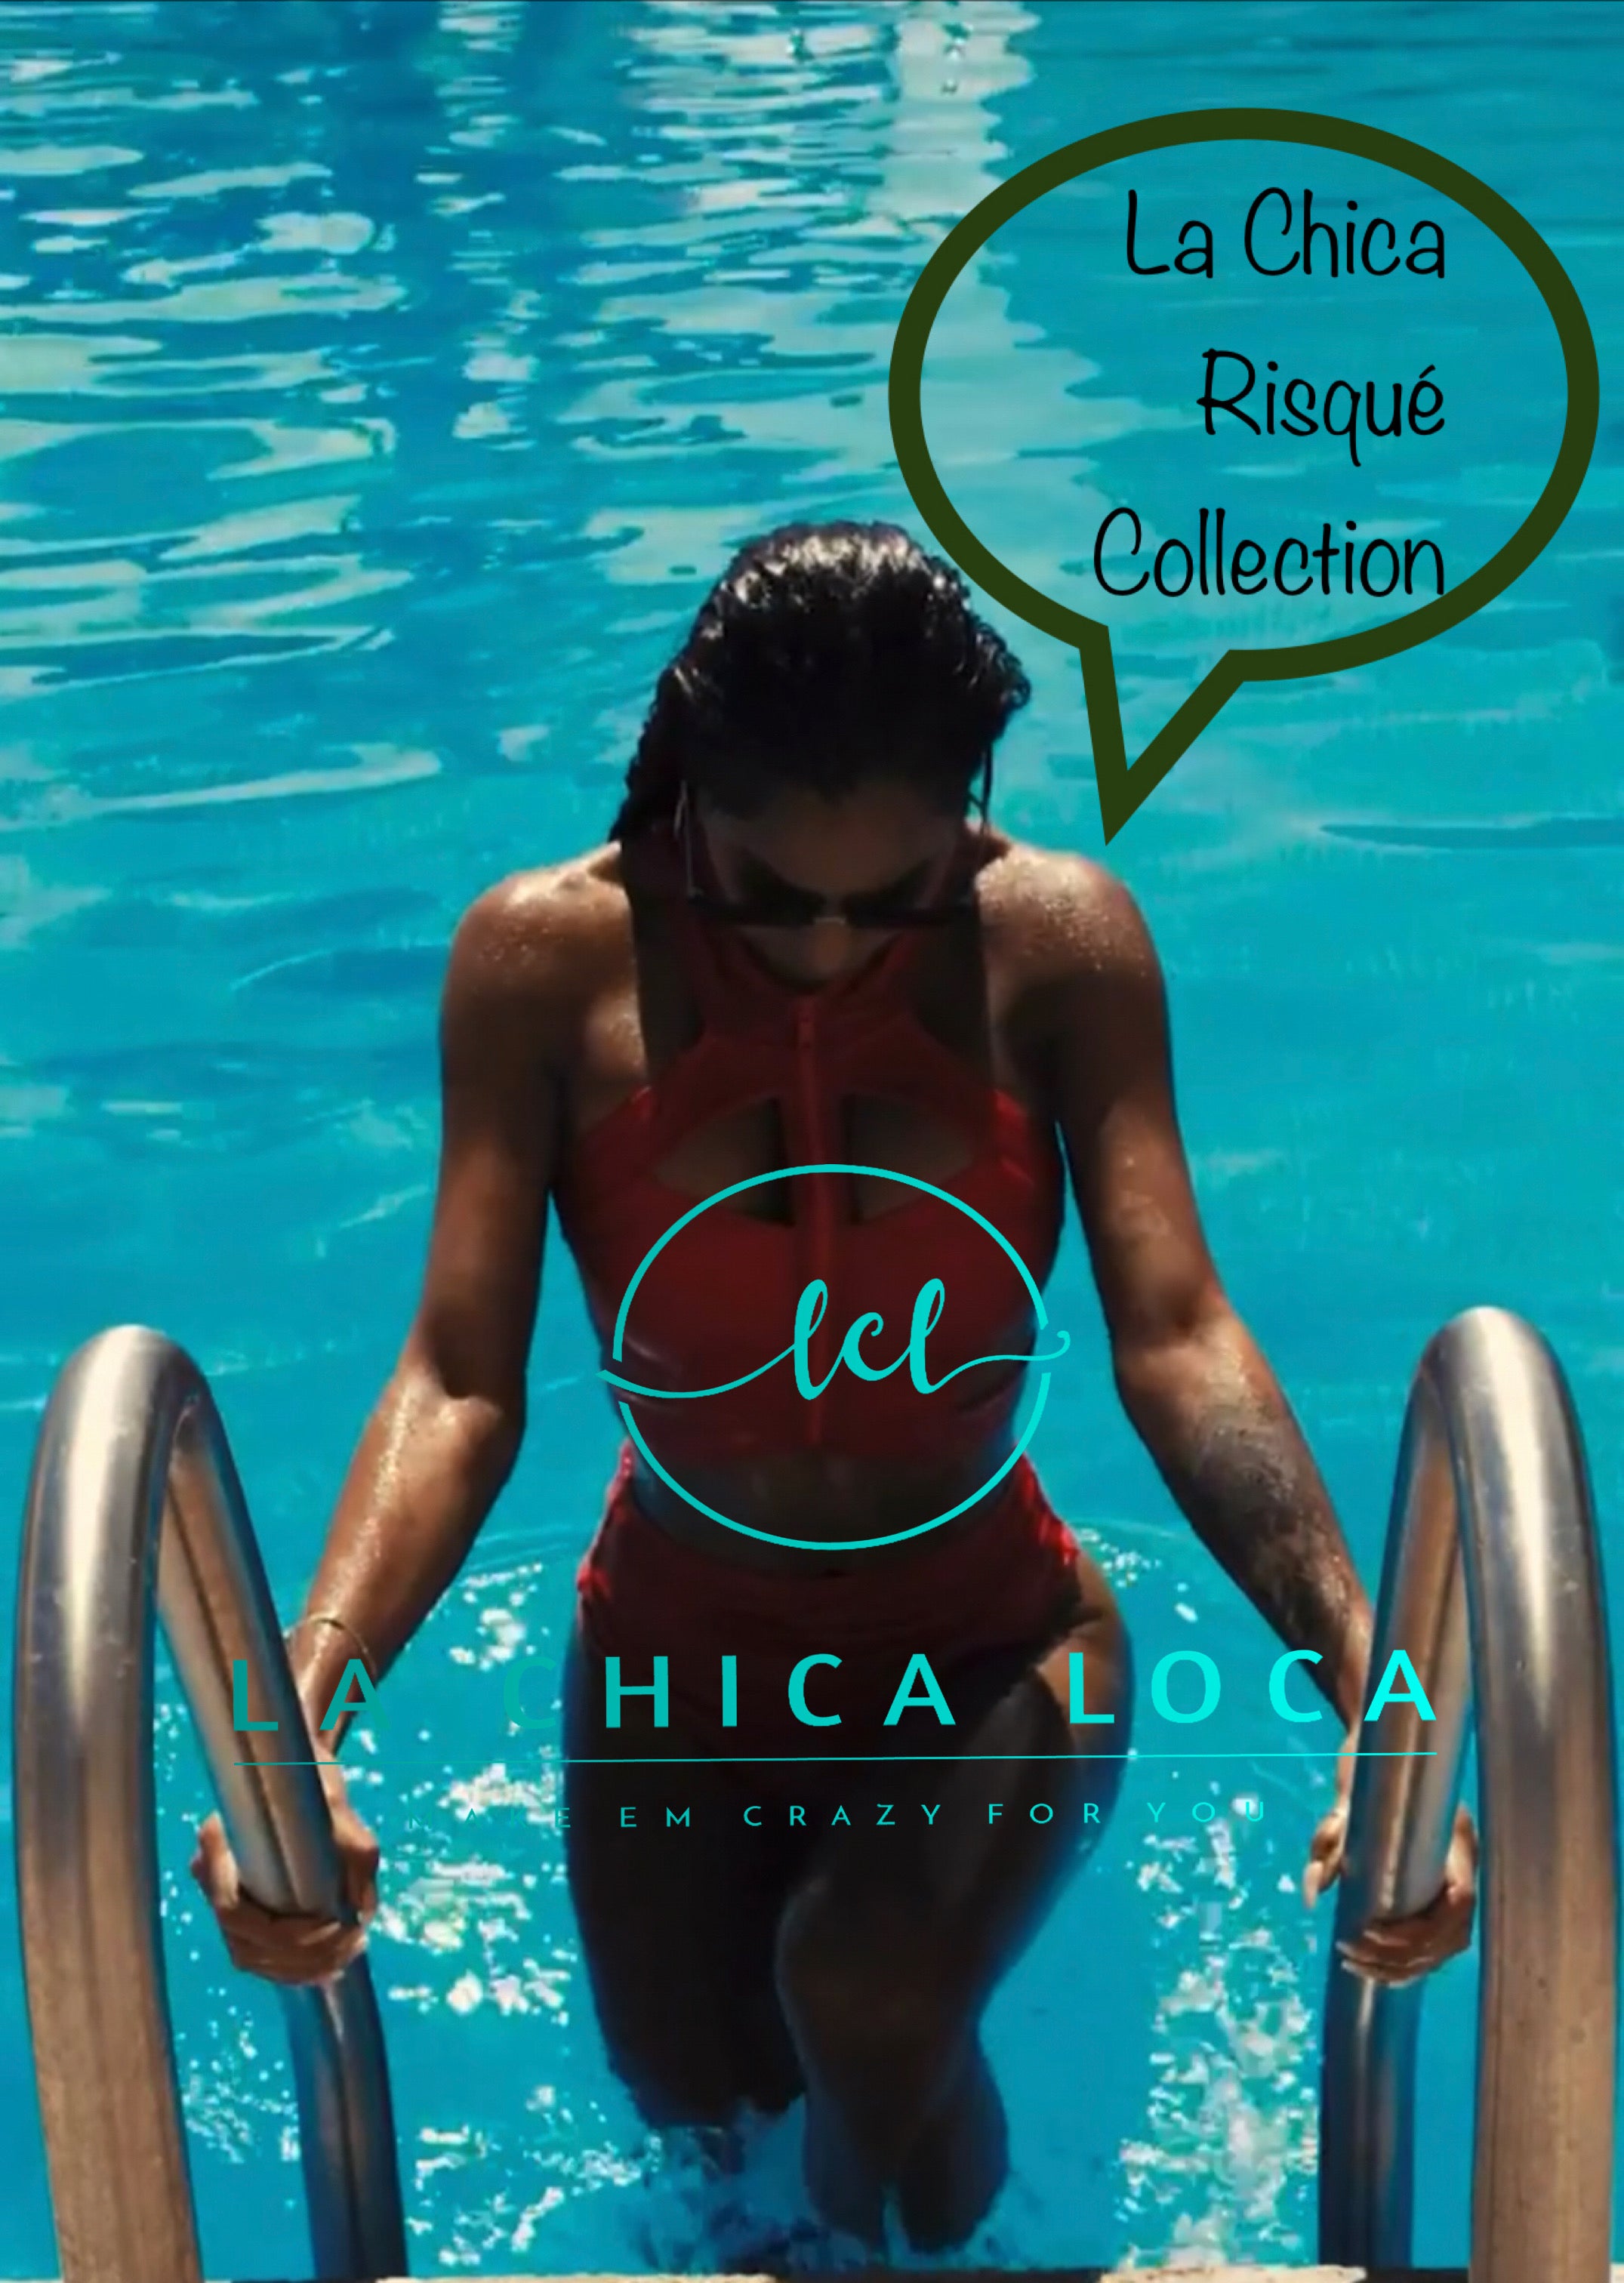 Check out our La Chica Risqué Collection